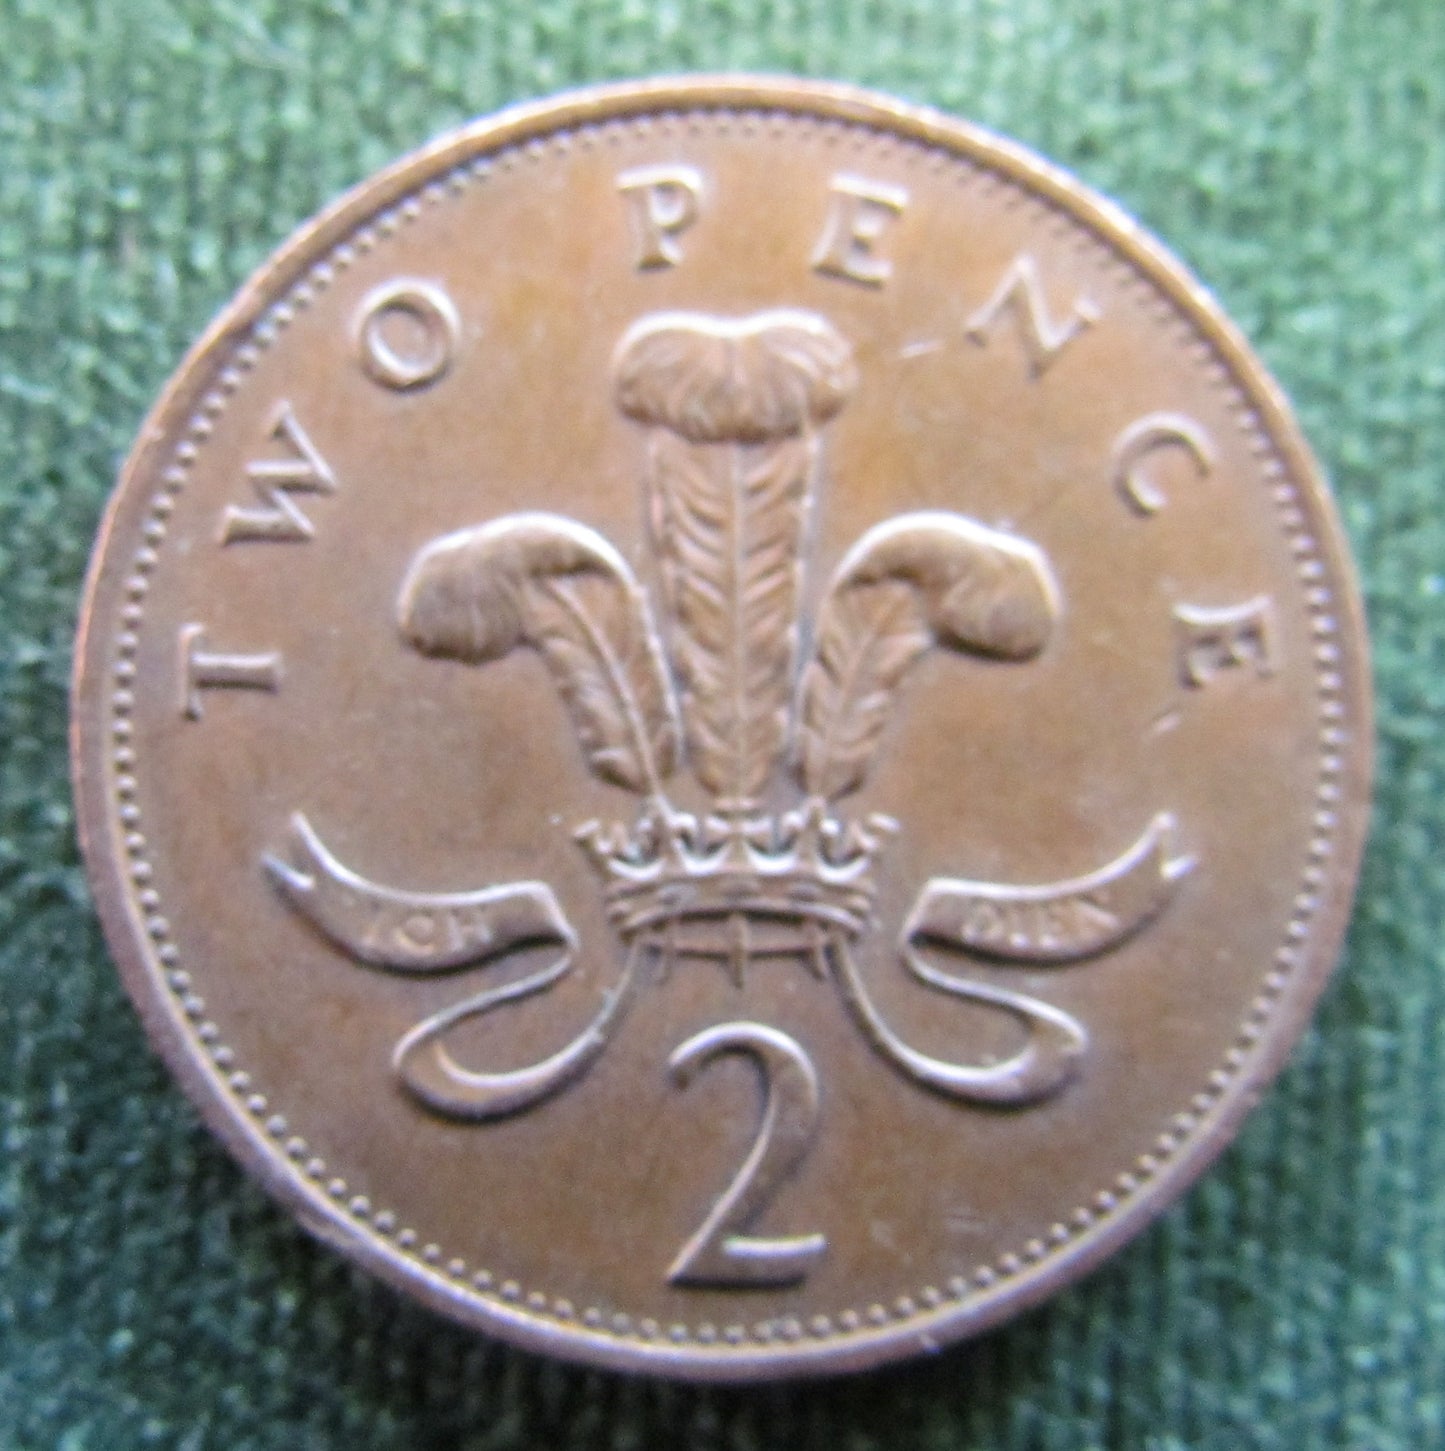 GB British UK English 1985 2 New Pence Queen Elizabeth II Coin